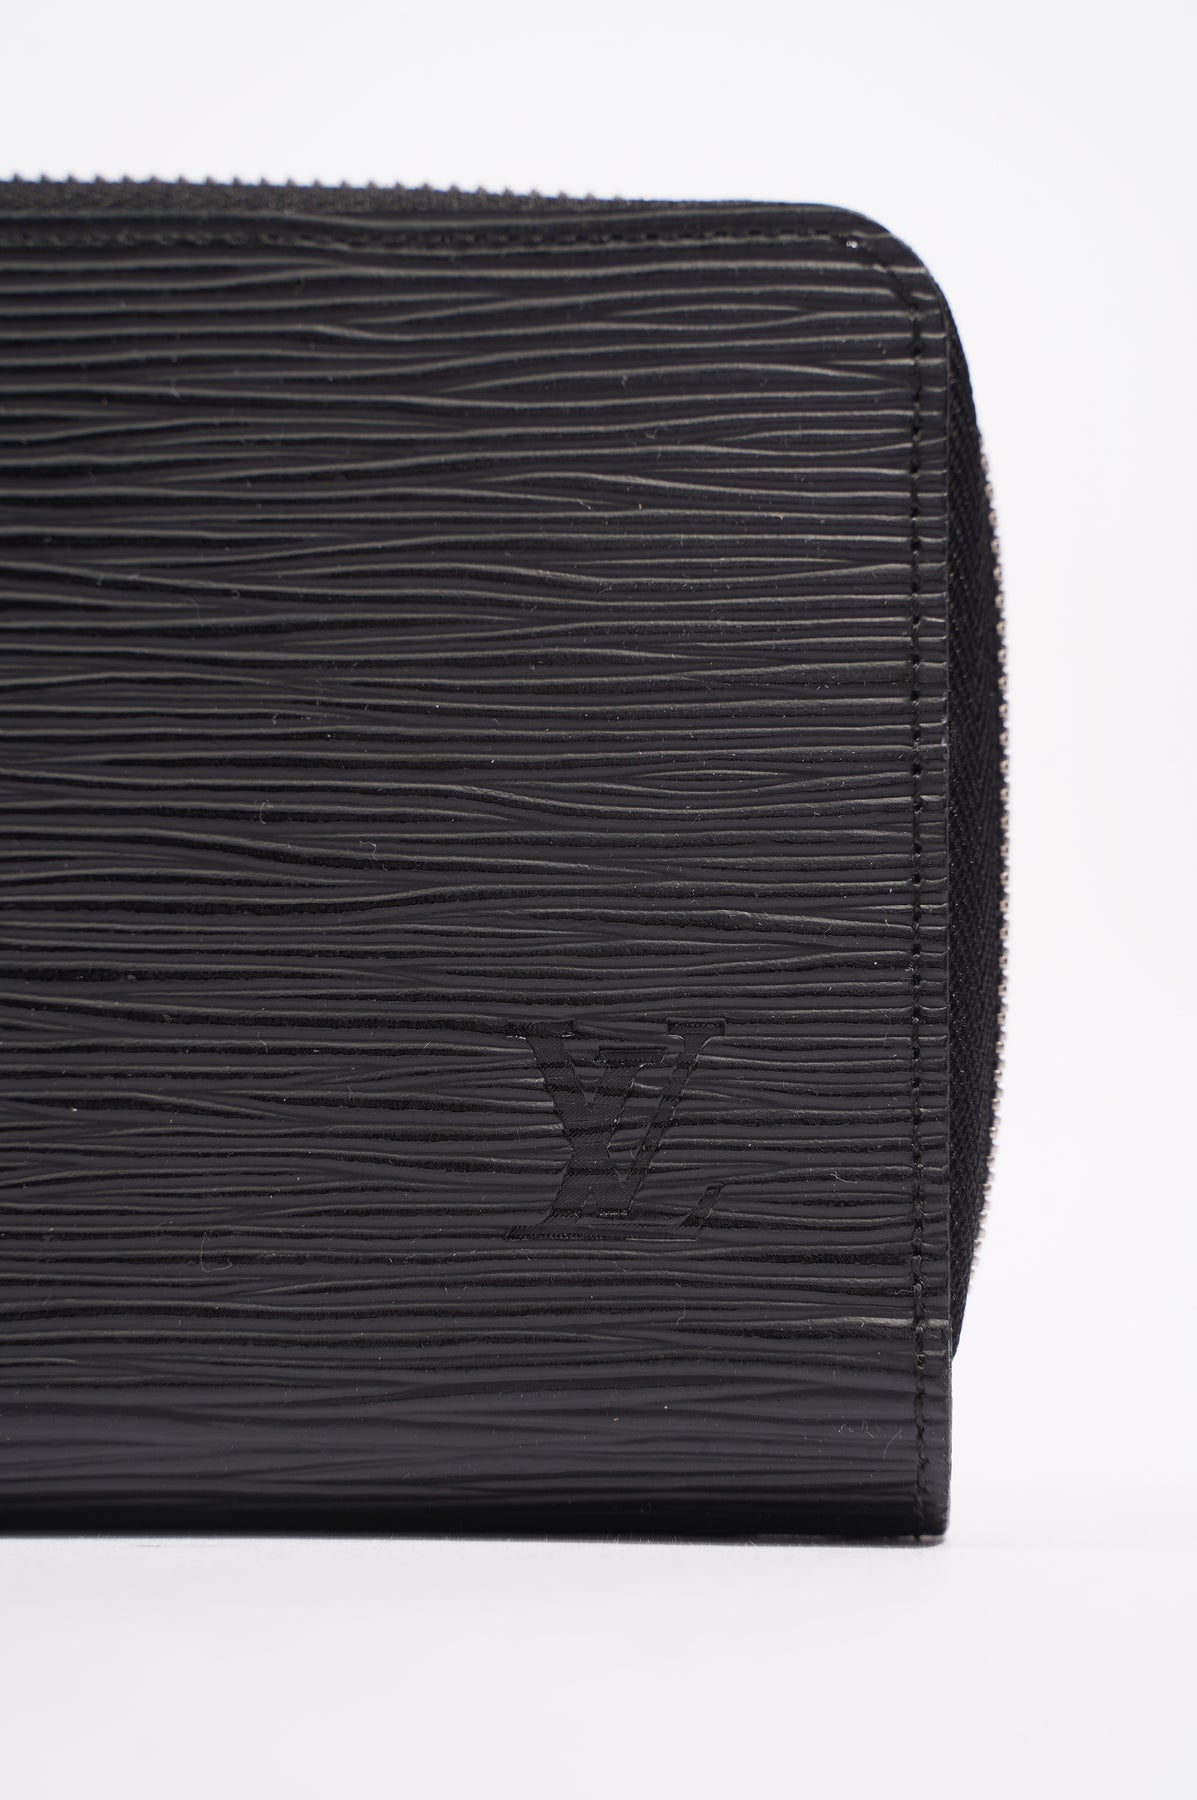 Louis Vuitton - Zippy Wallet - Monogram Leather - Black / Beige - Women - Luxury